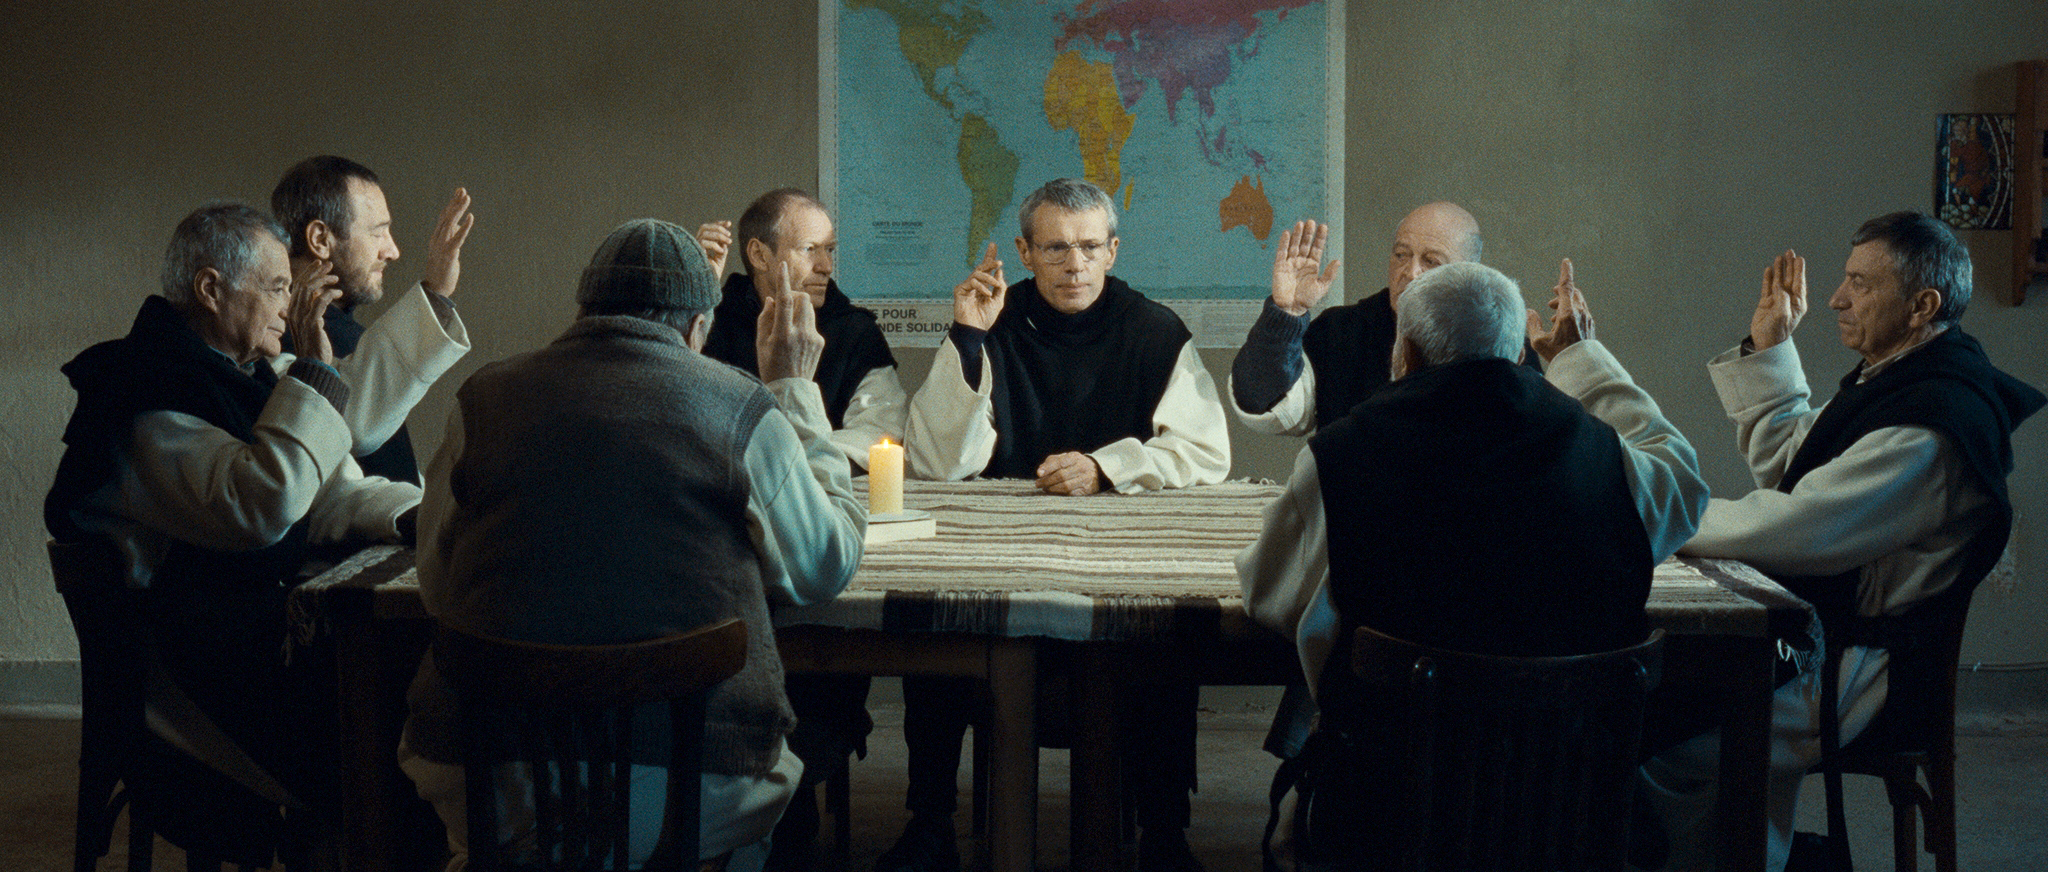 Still of Jean-Marie Frin, Philippe Laudenbach, Xavier Maly, Loïc Pichon, Olivier Rabourdin and Lambert Wilson in Des hommes et des dieux (2010)